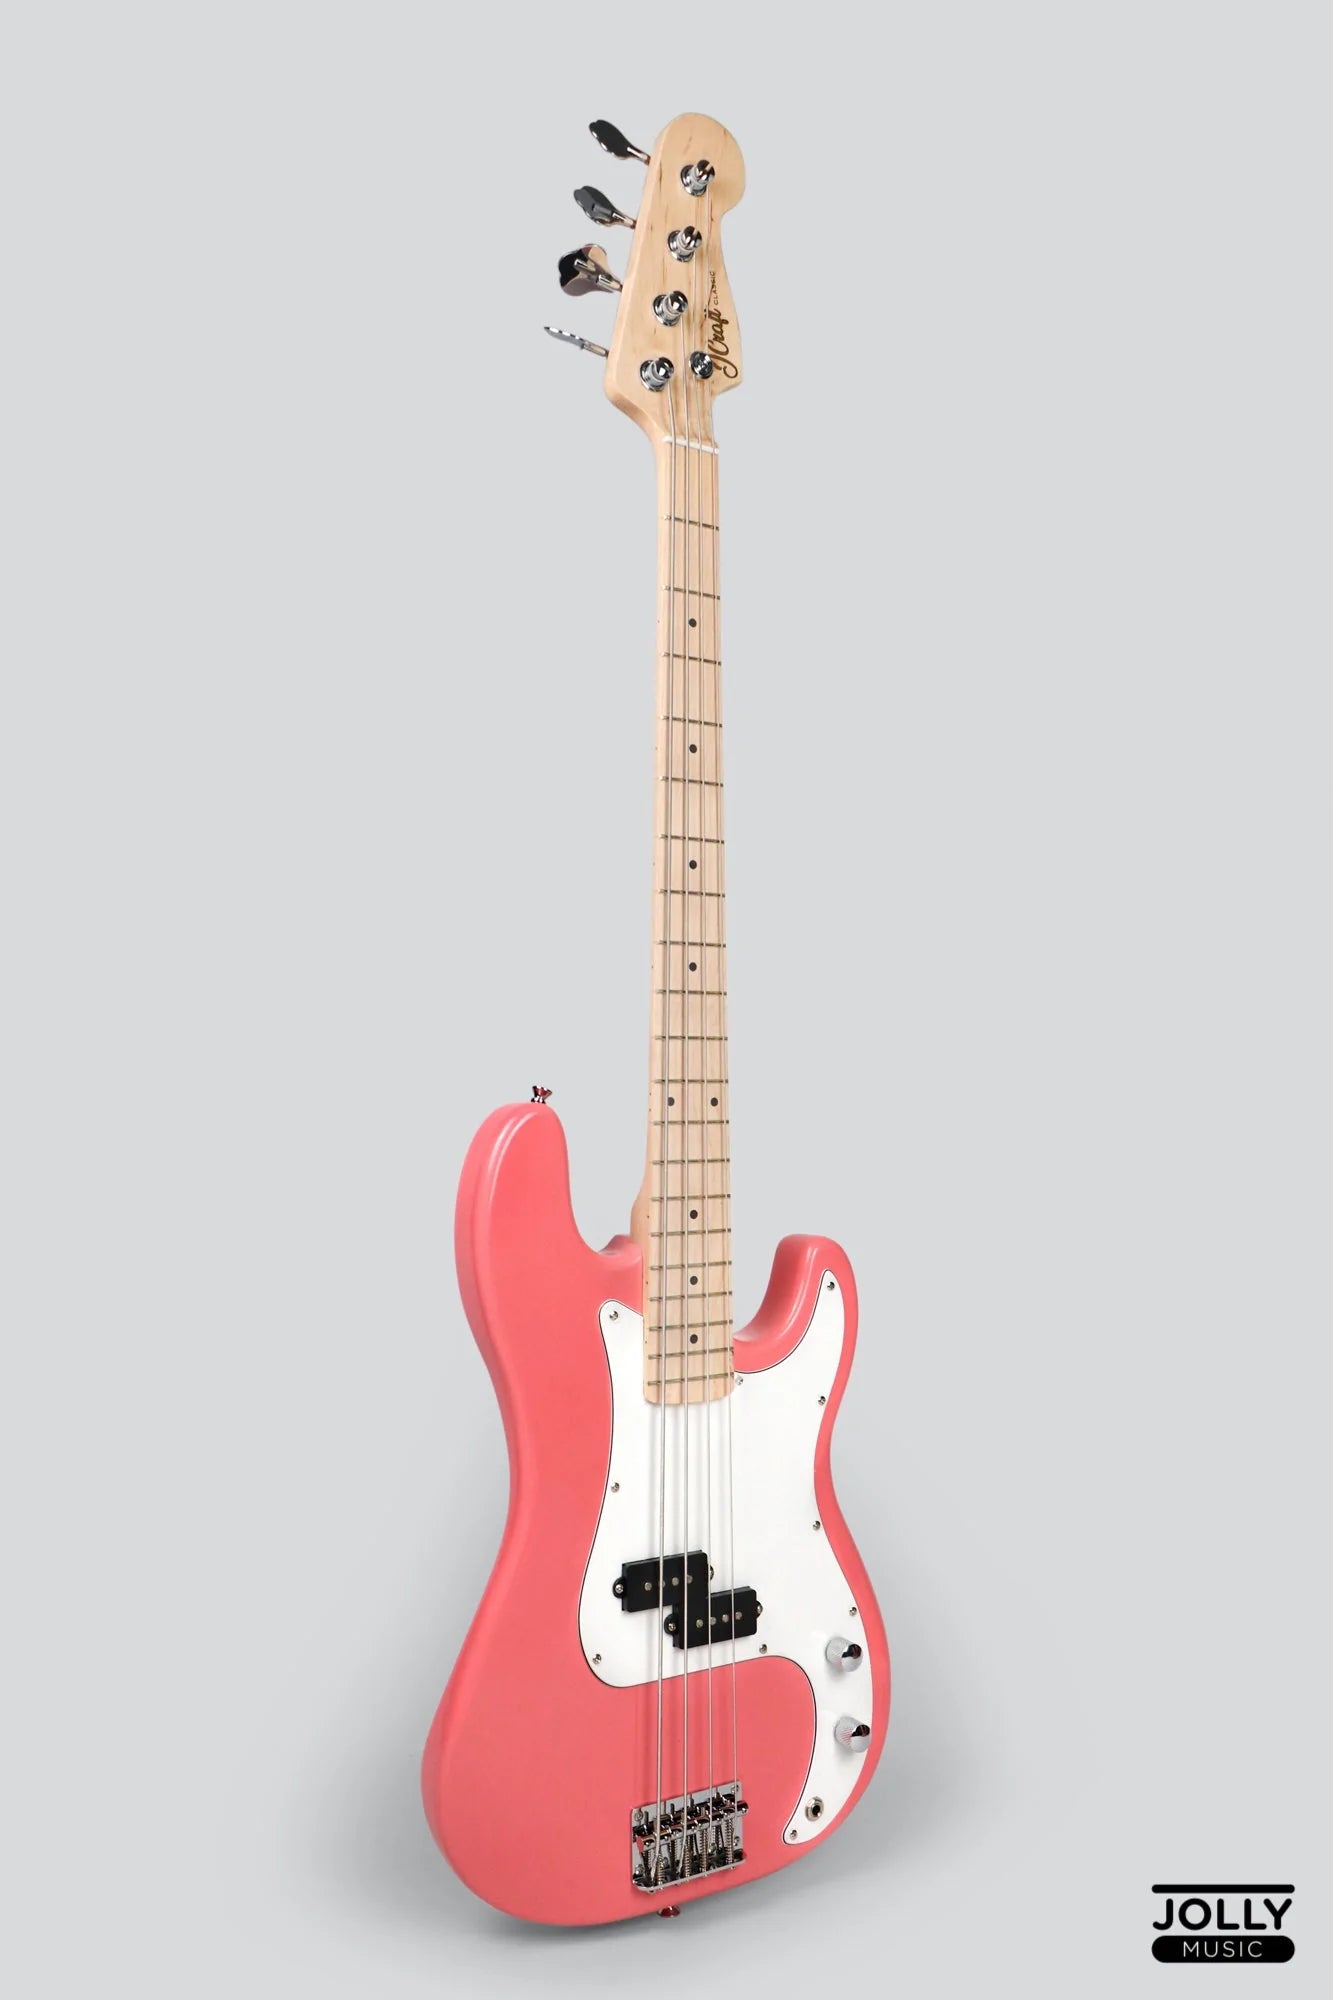 JCraft PB-1 4-String Electric Bass Guitar with Gigbag - Salmon